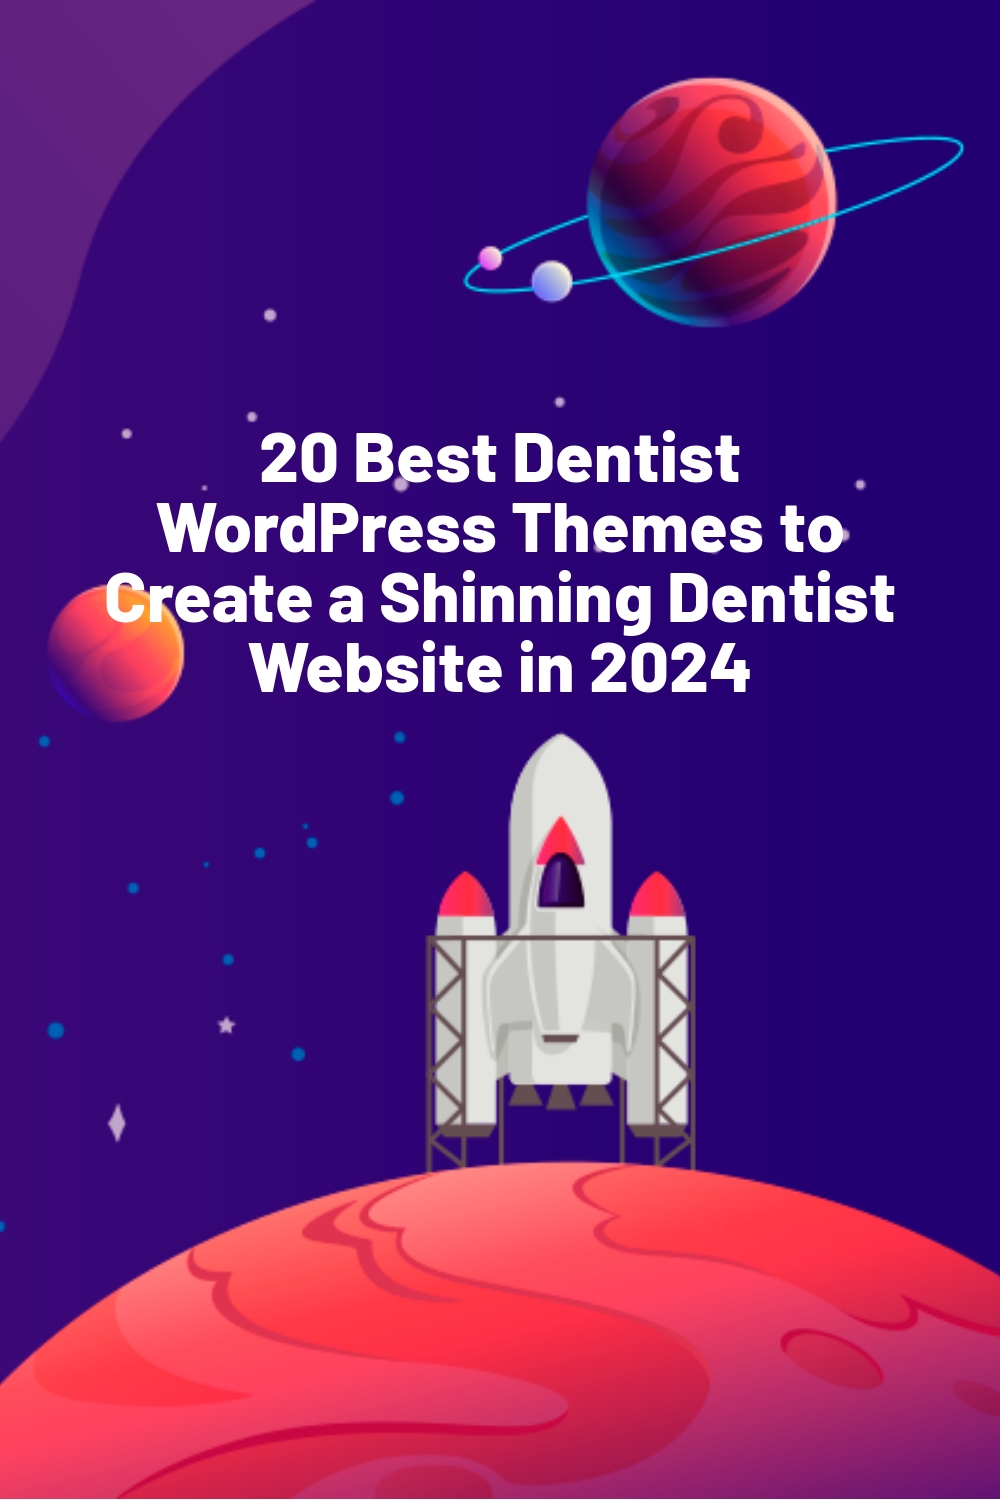 20 Best Dentist WordPress Themes to Create a Shinning Dentist Website in 2024